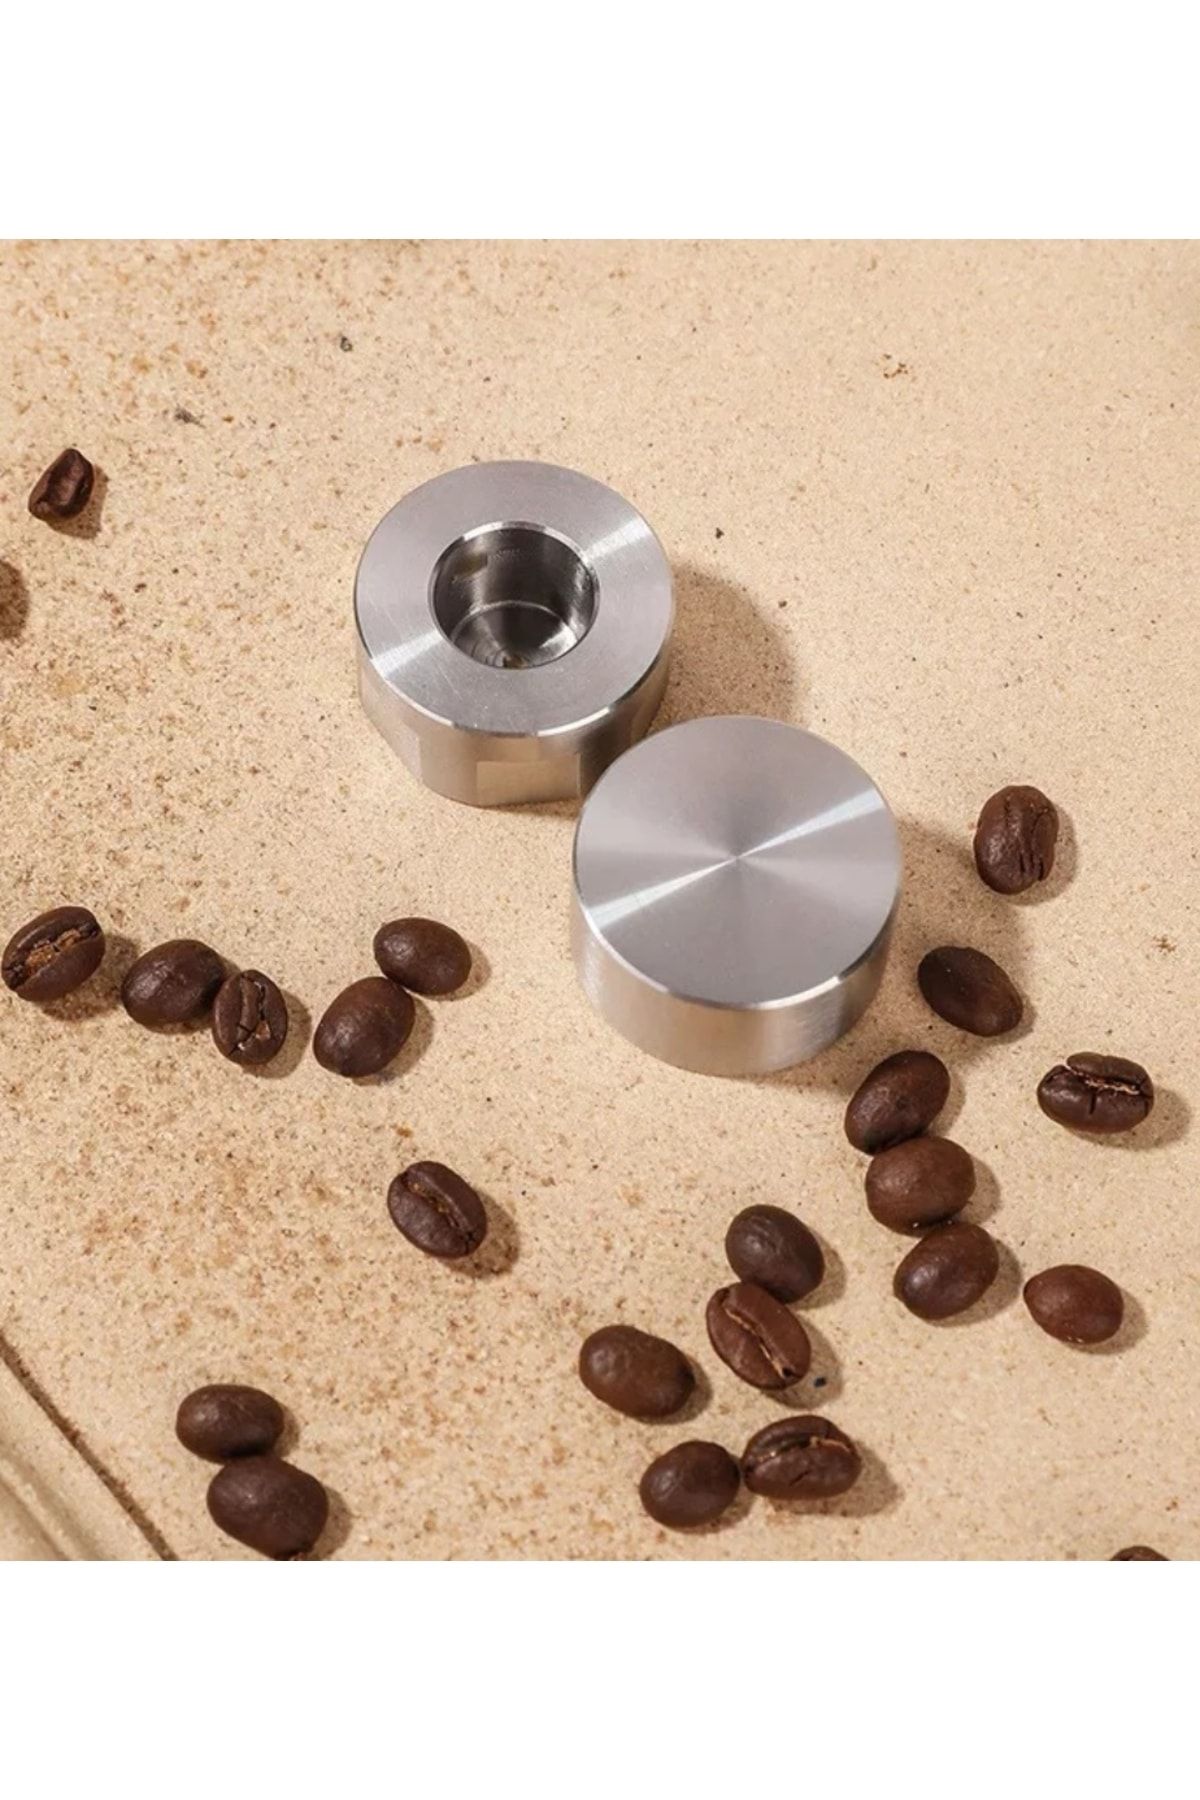 COFFEEHUTT Mokapot Iç Hazne Sıçratma Önleyici Çelik Kapak Mokapot Kahve Demleme